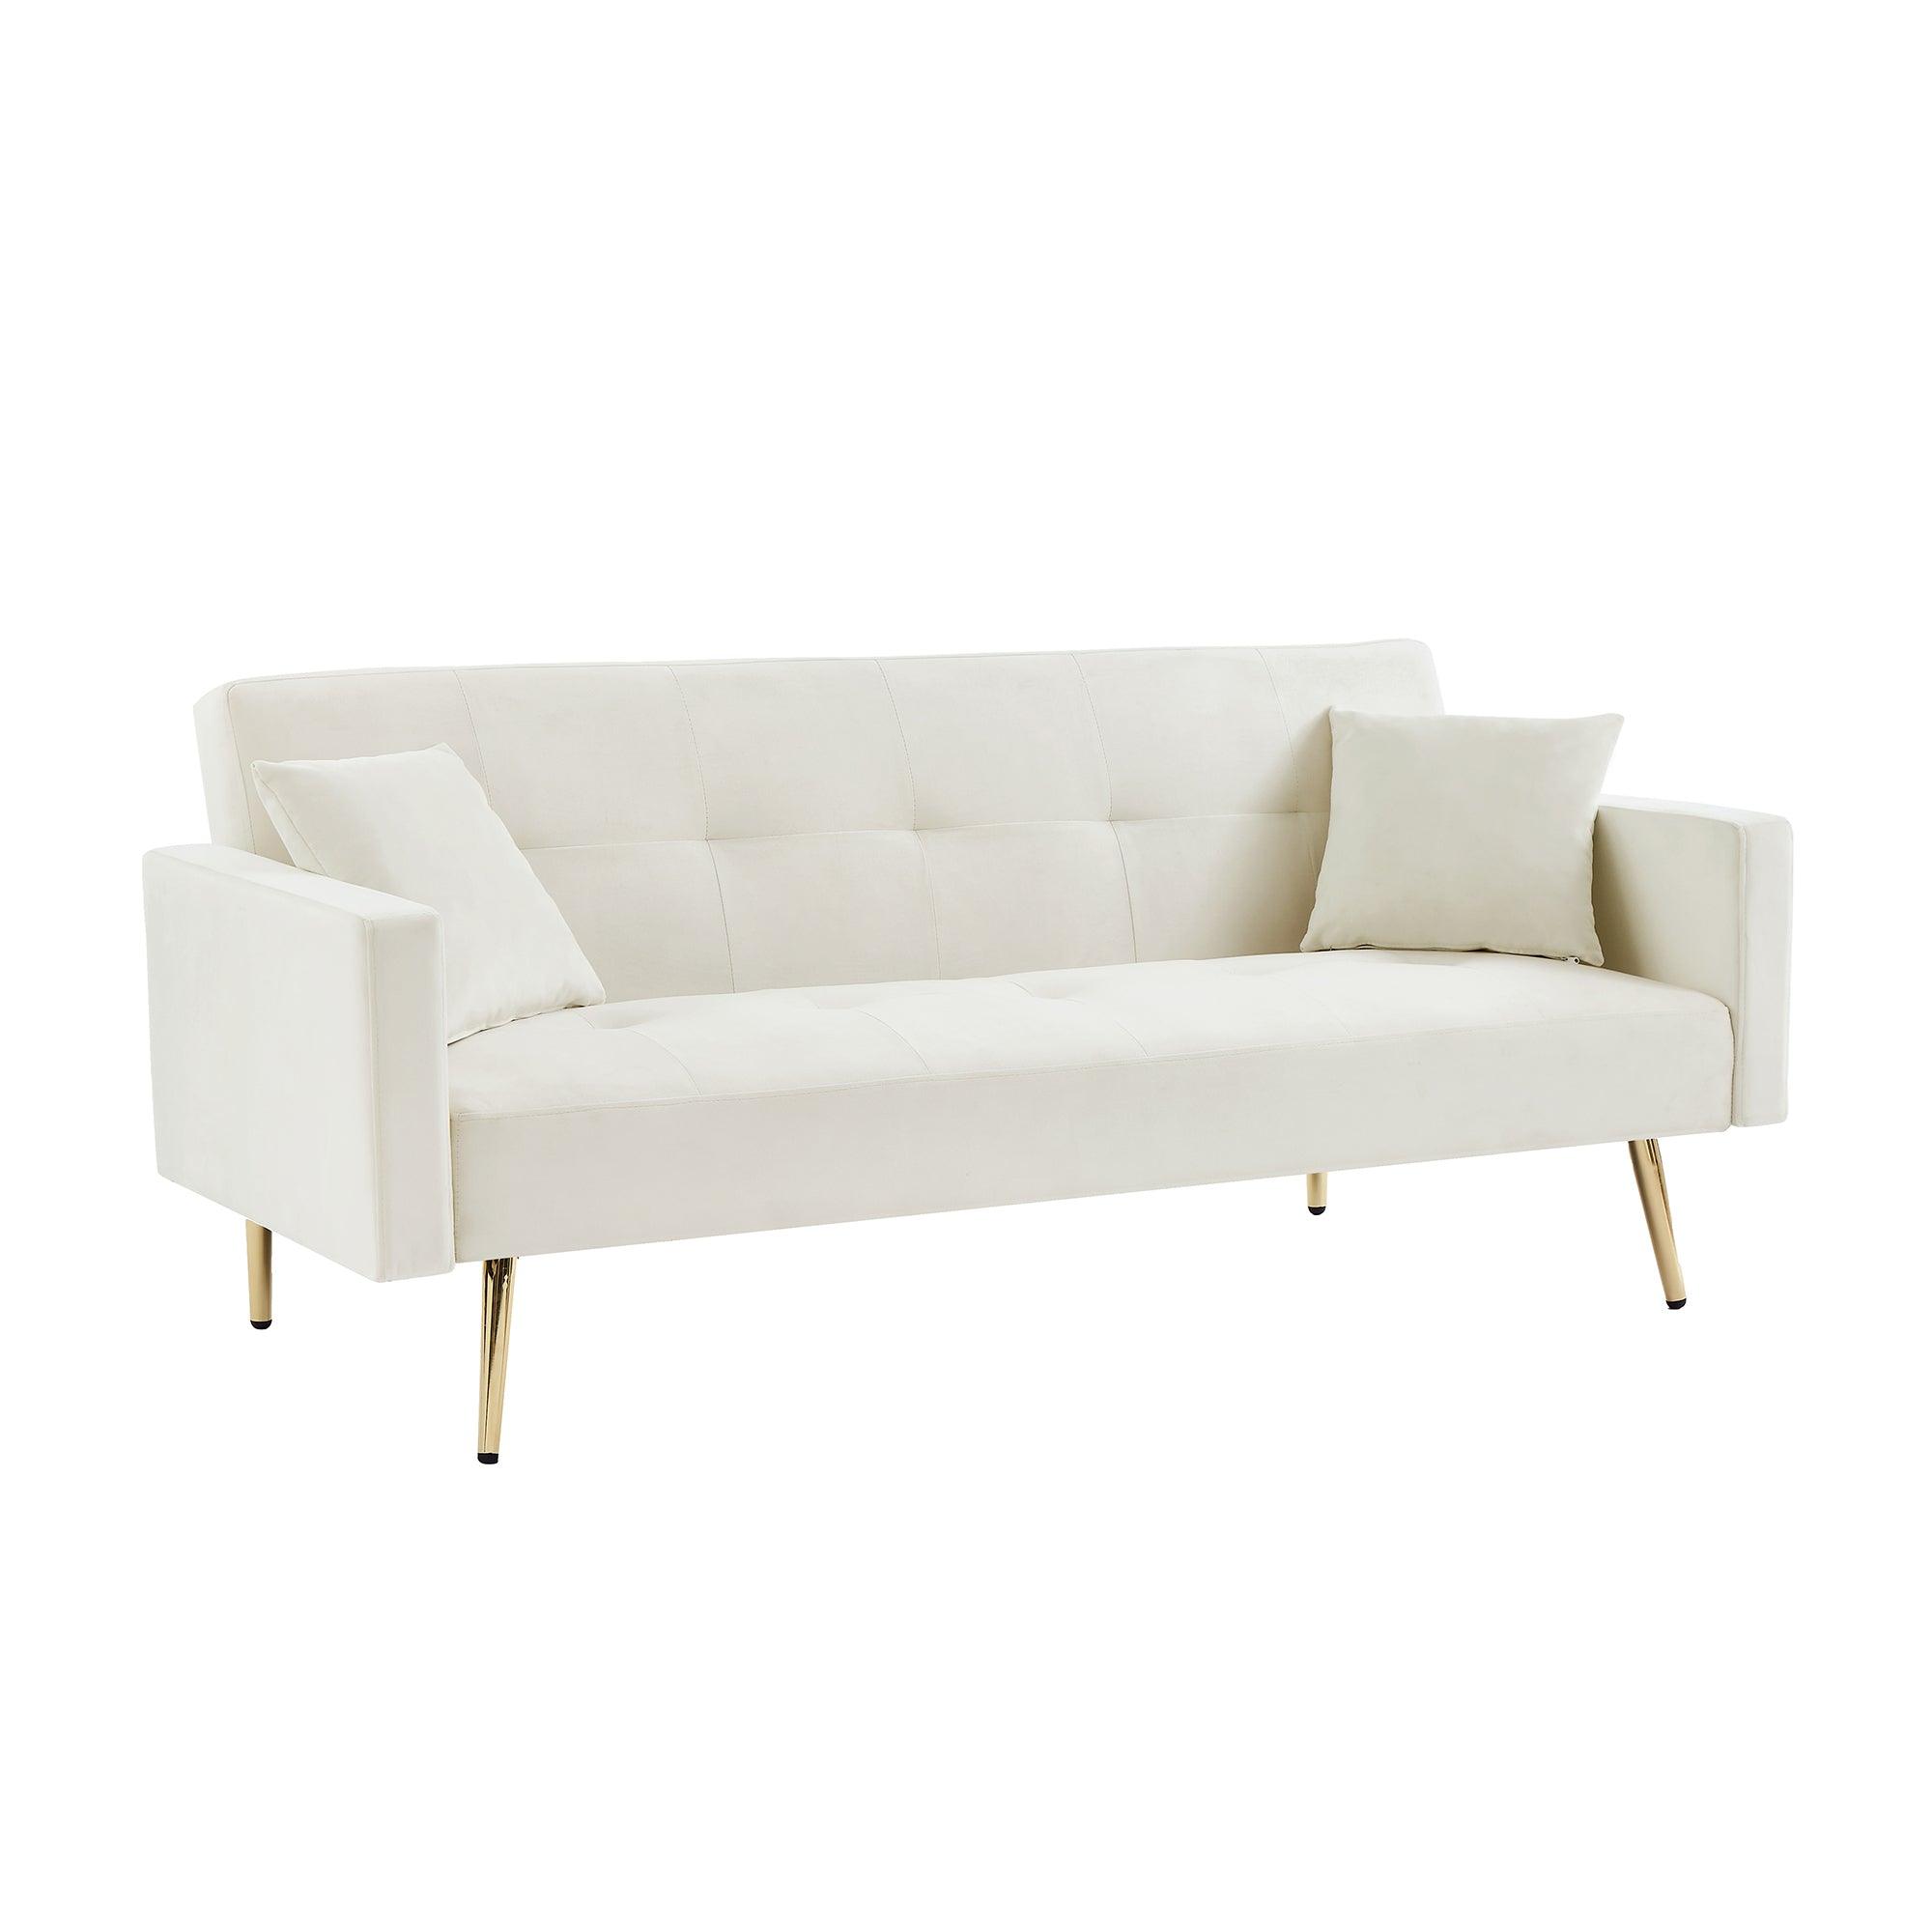 Cream White Velvet  Convertible Folding Futon Sofa Bed, Sleeper Sofa Couch For Compact Living Space. LamCham